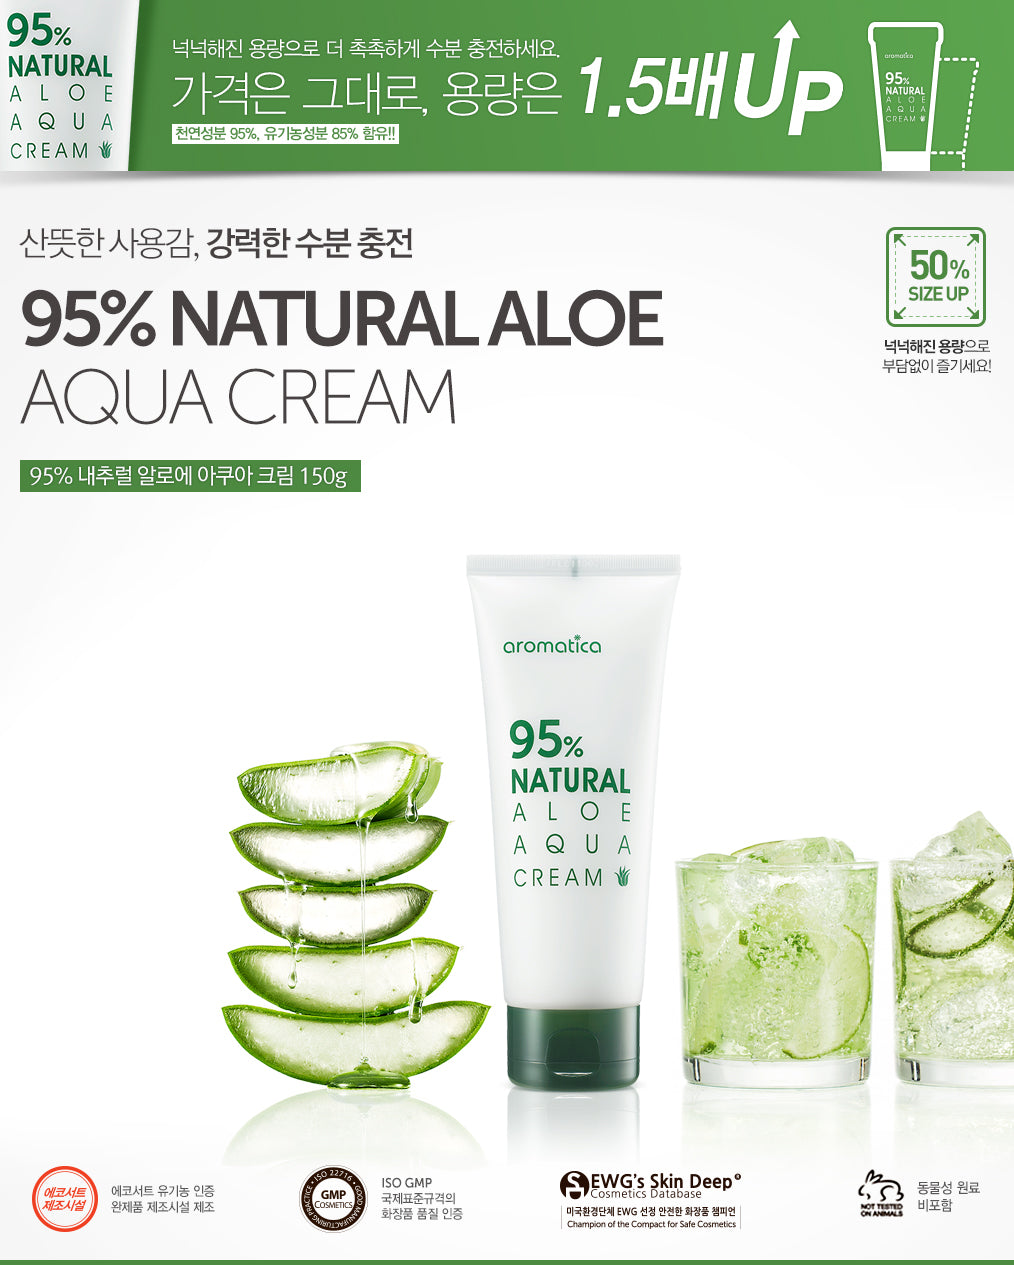 Aromatica – 95% Natural Aloe Aqua Cream